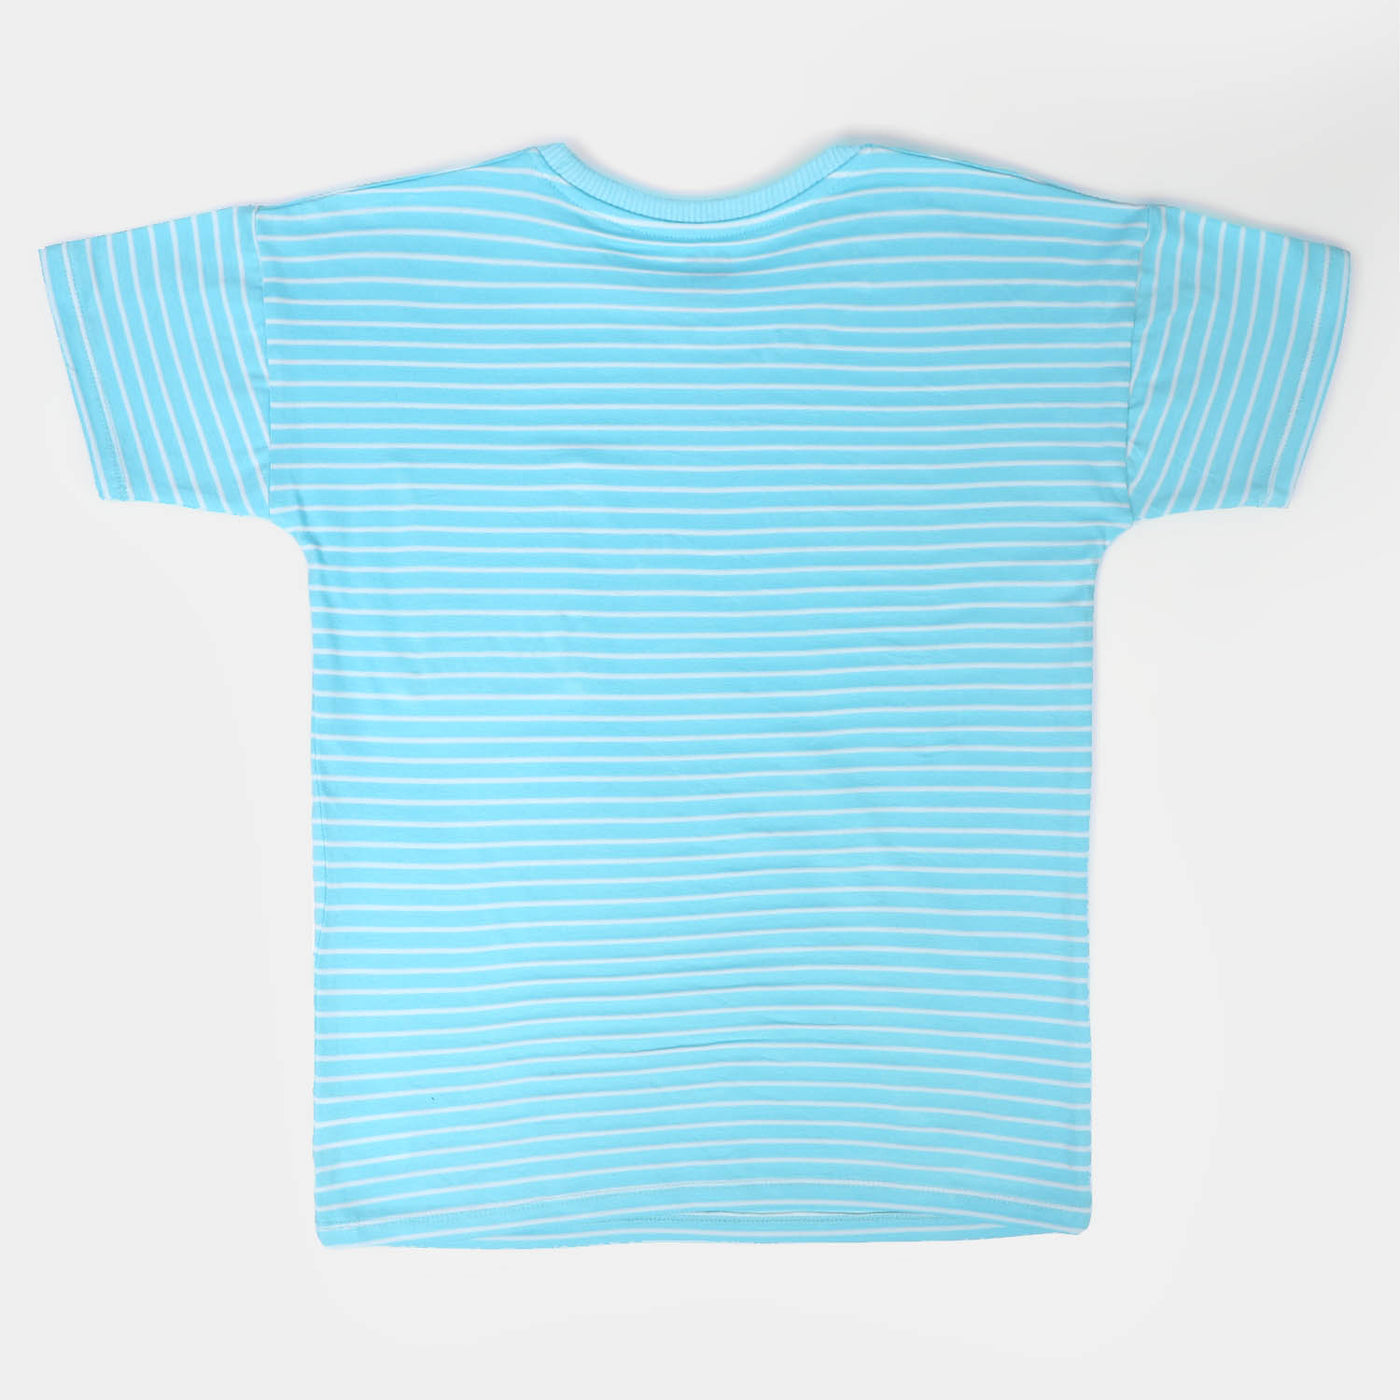 Boys Cotton T-Shirt Okay Great | L-Blue